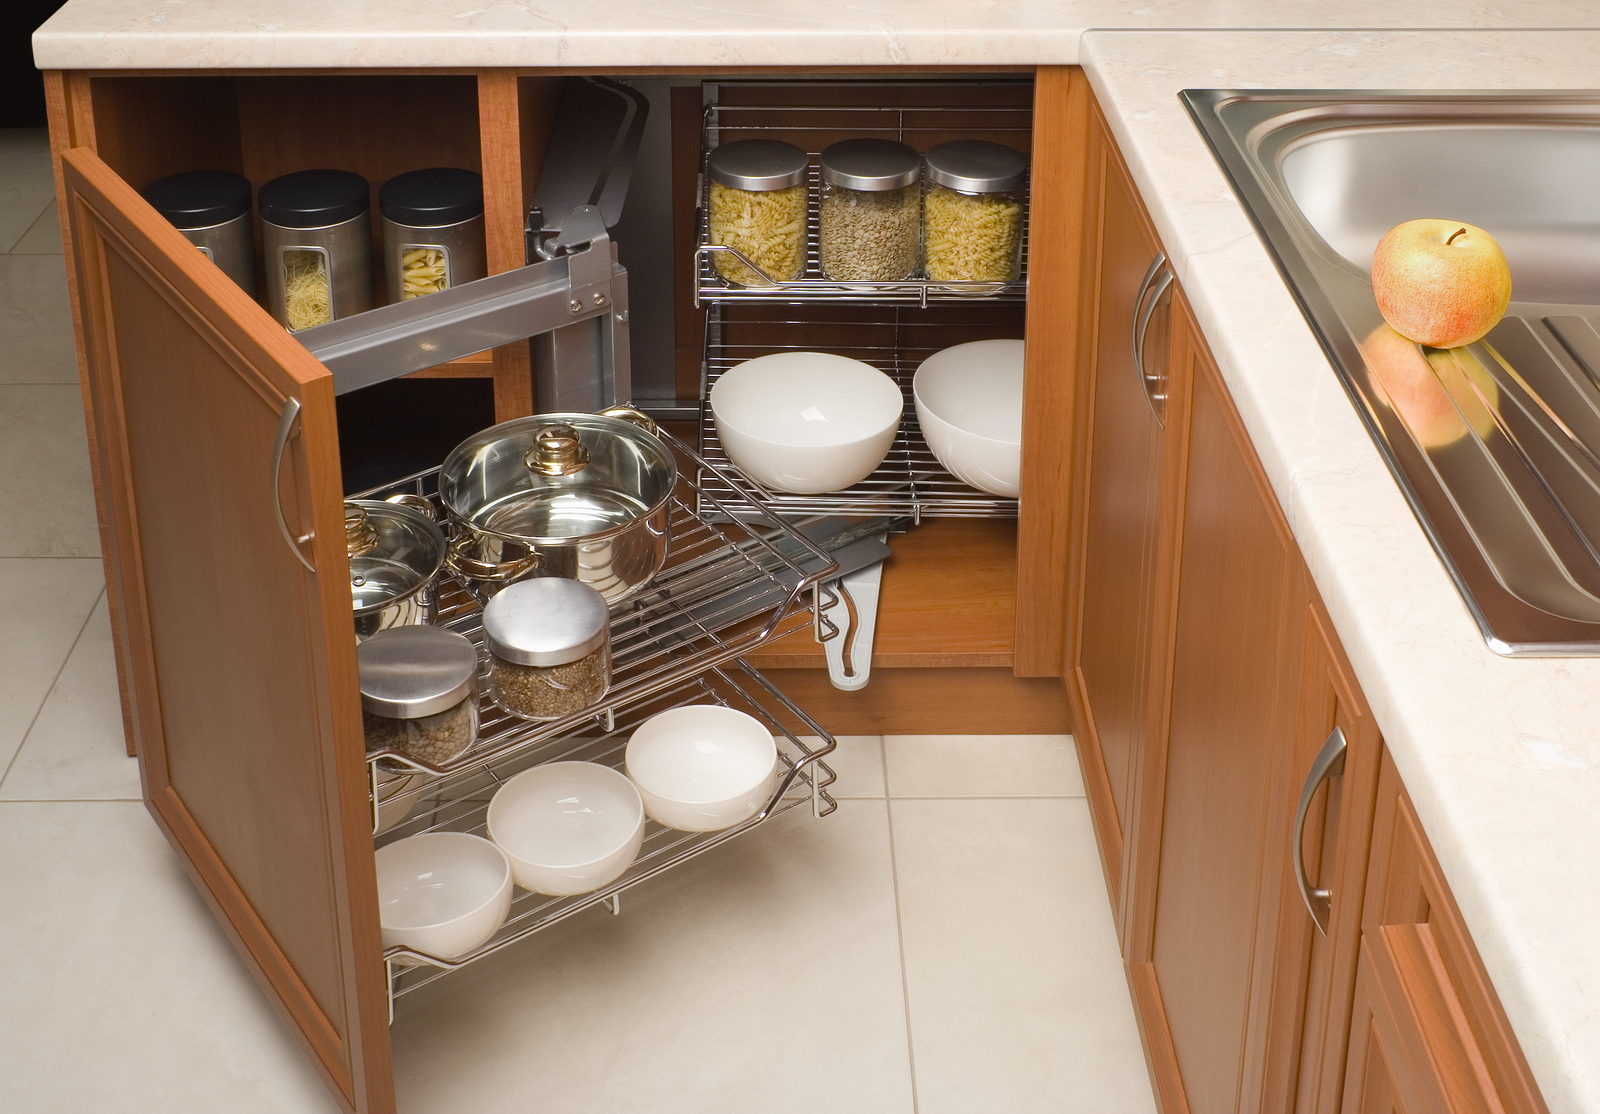 Detail of open kitchen cabinet